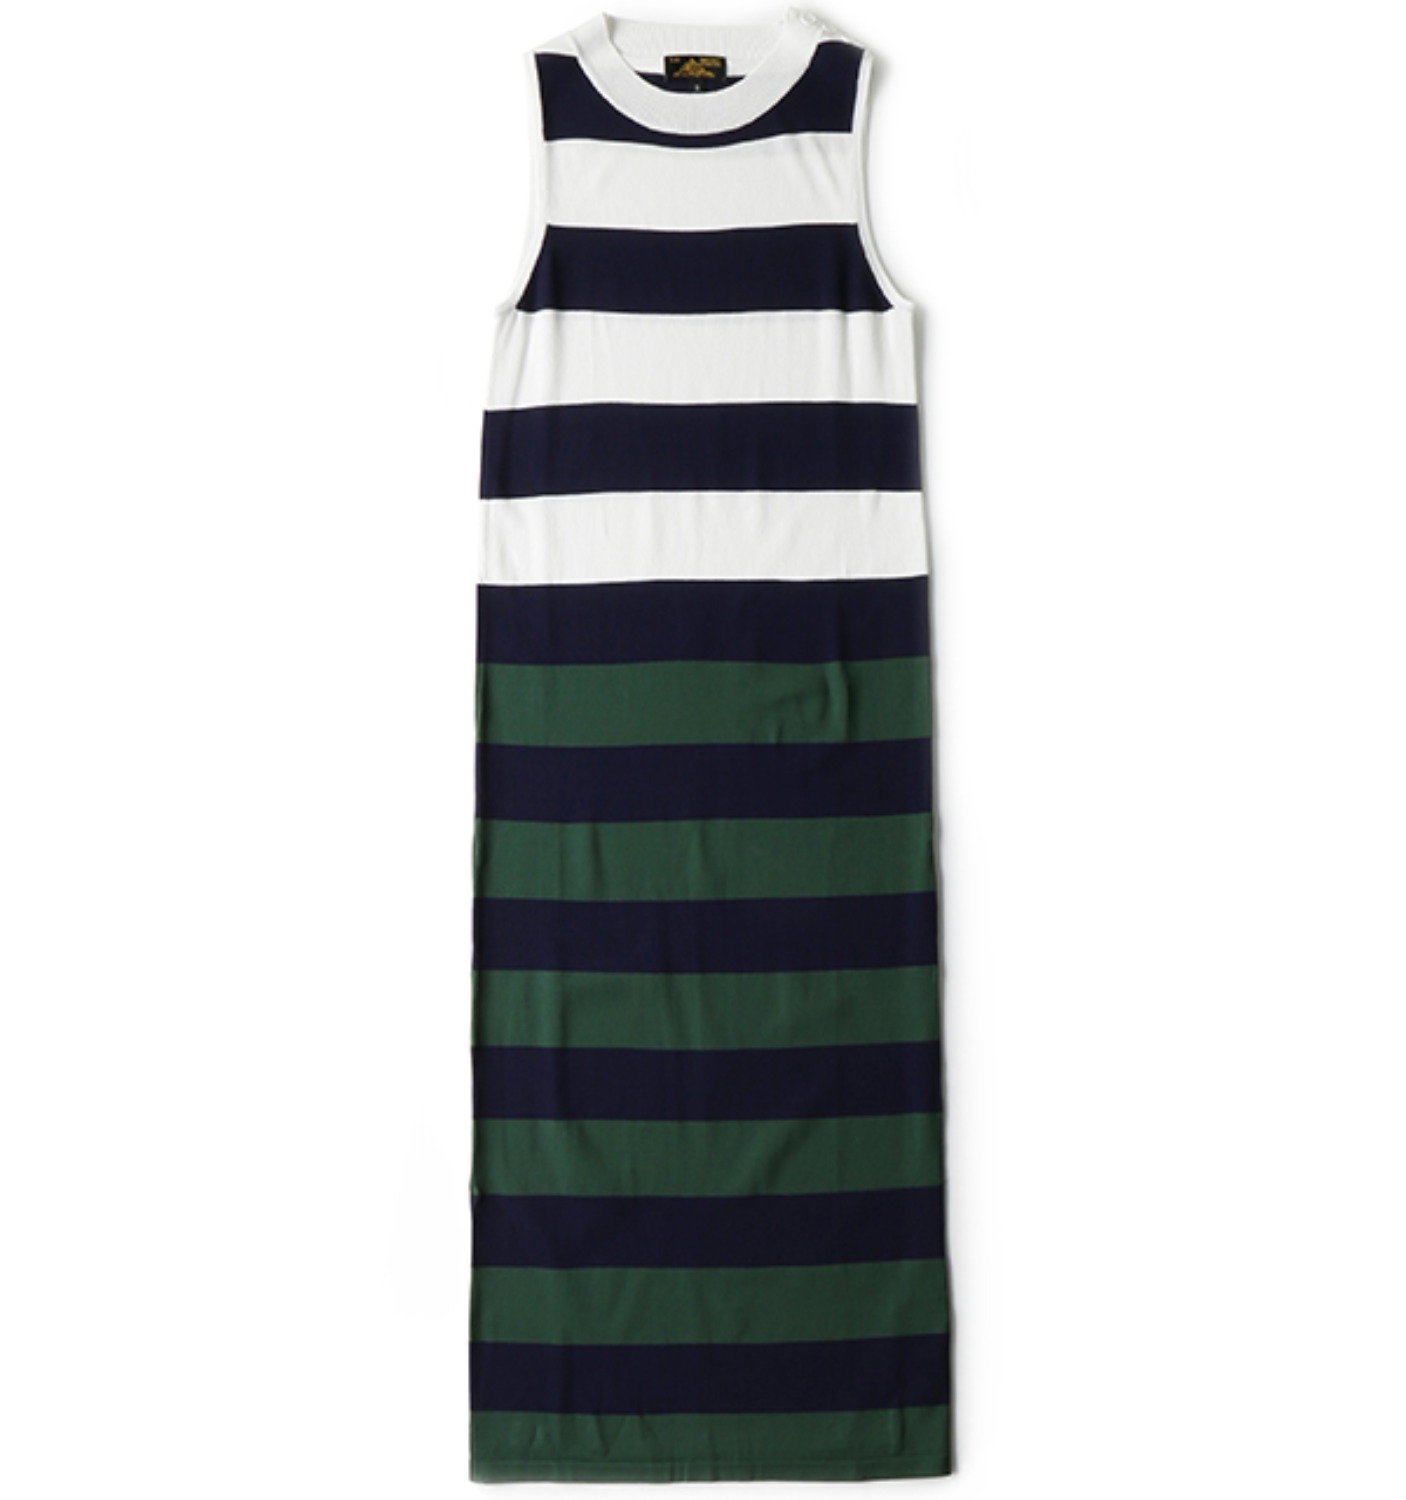 Tricolor wide stripes dress (12732F)